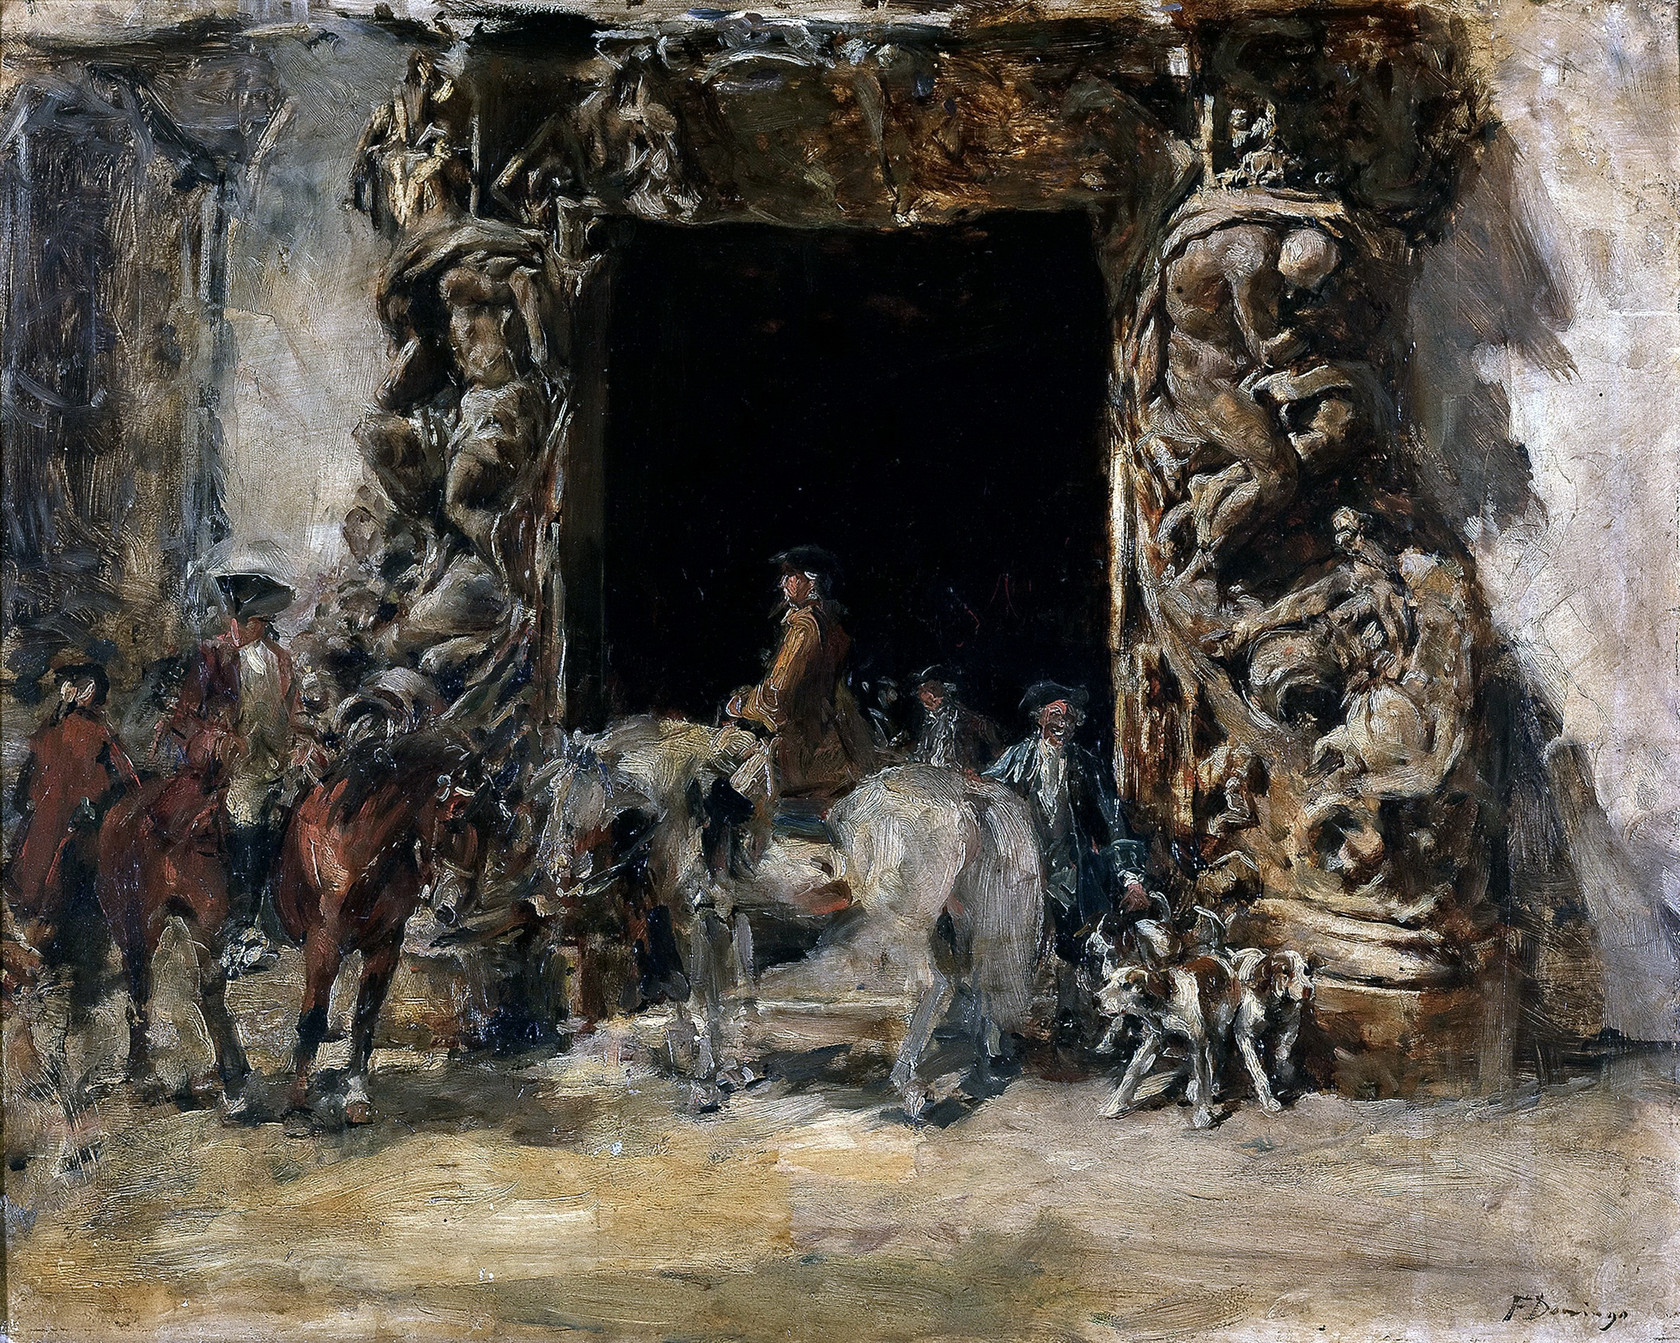 Картина Ворота дворца дель Маркес де Дос Агуас (Валенсия) 1885 - Музей Прадо